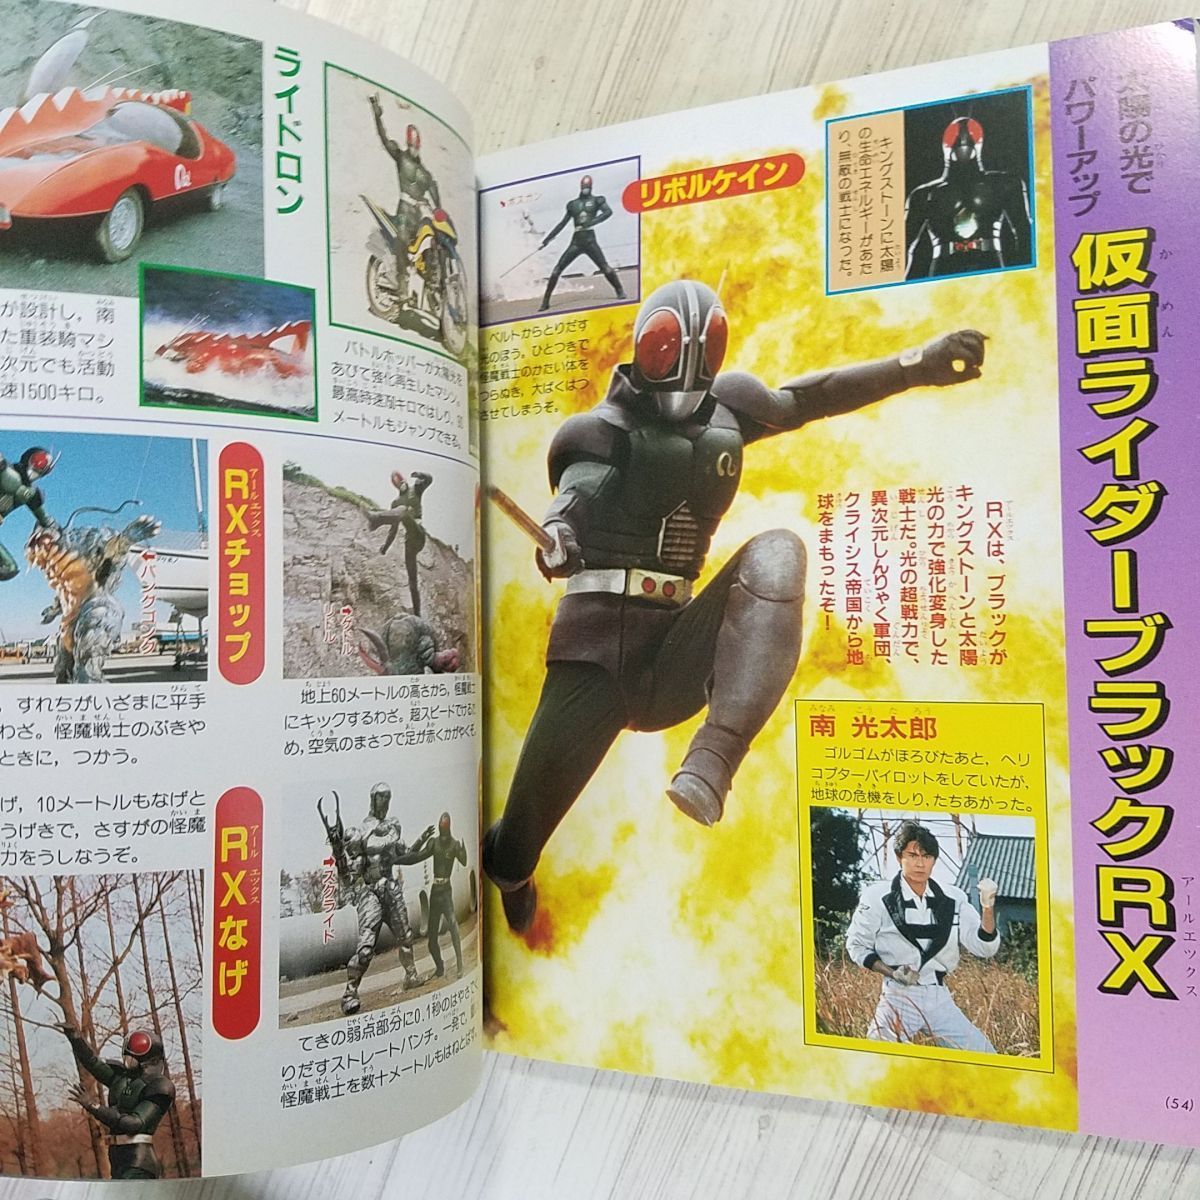  special effects series [ all Kamen Rider super various subjects ] tv magazine Deluxe 13 Showa era rider Kamen Rider birth 20 anniversary commemoration 